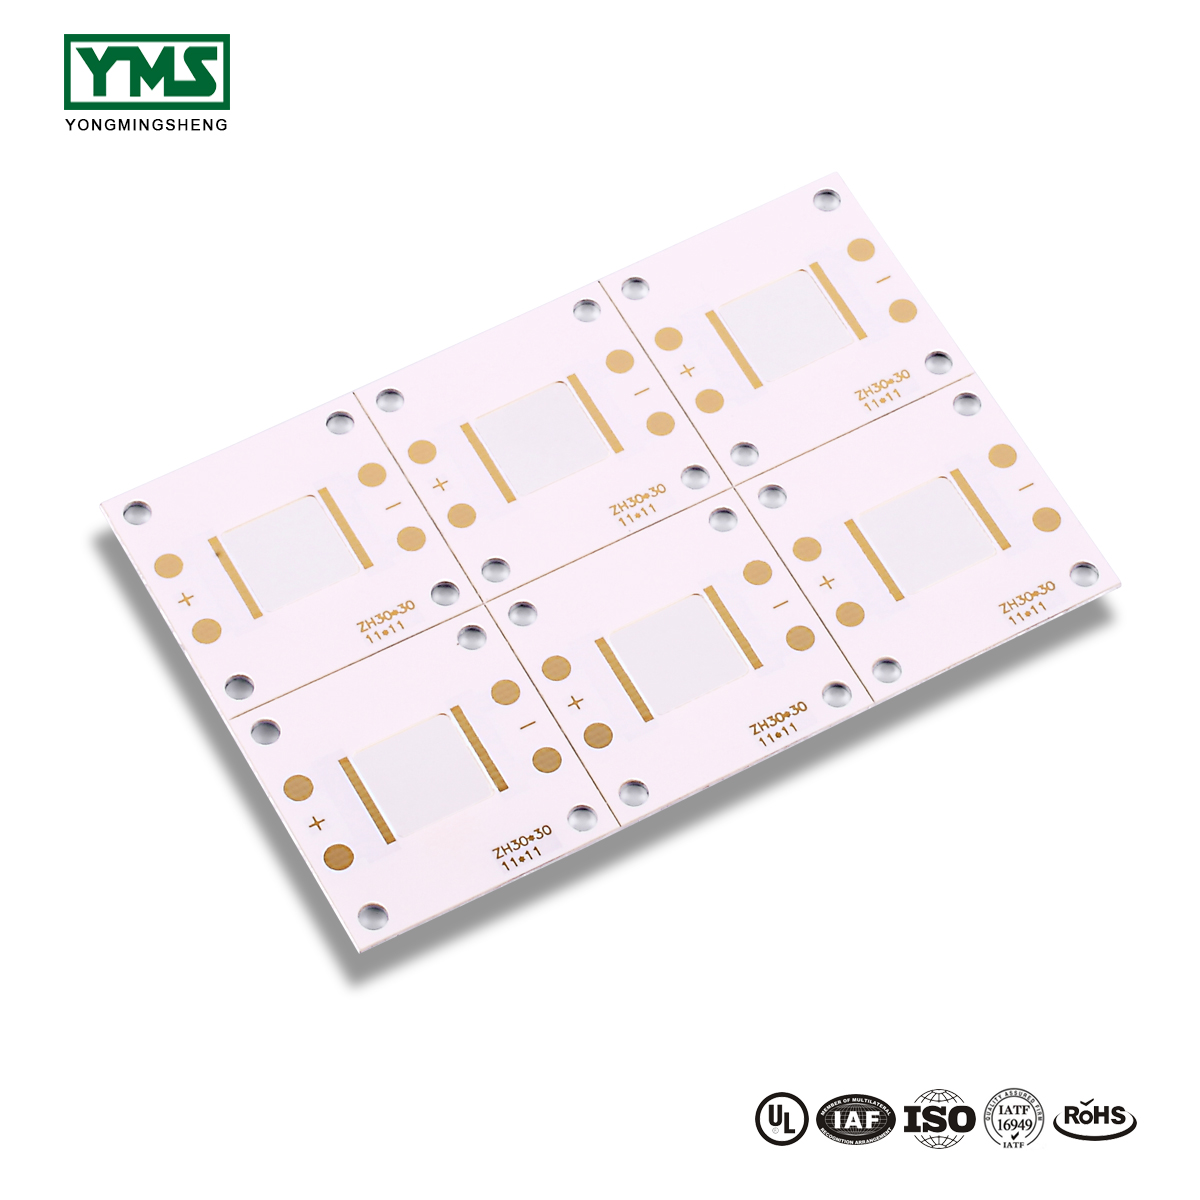 OEM/ODM Supplier Ultra-Thin Flexible Pcb - 1Layer mirror Aluminum Base Board | YMSPCB – Yongmingsheng